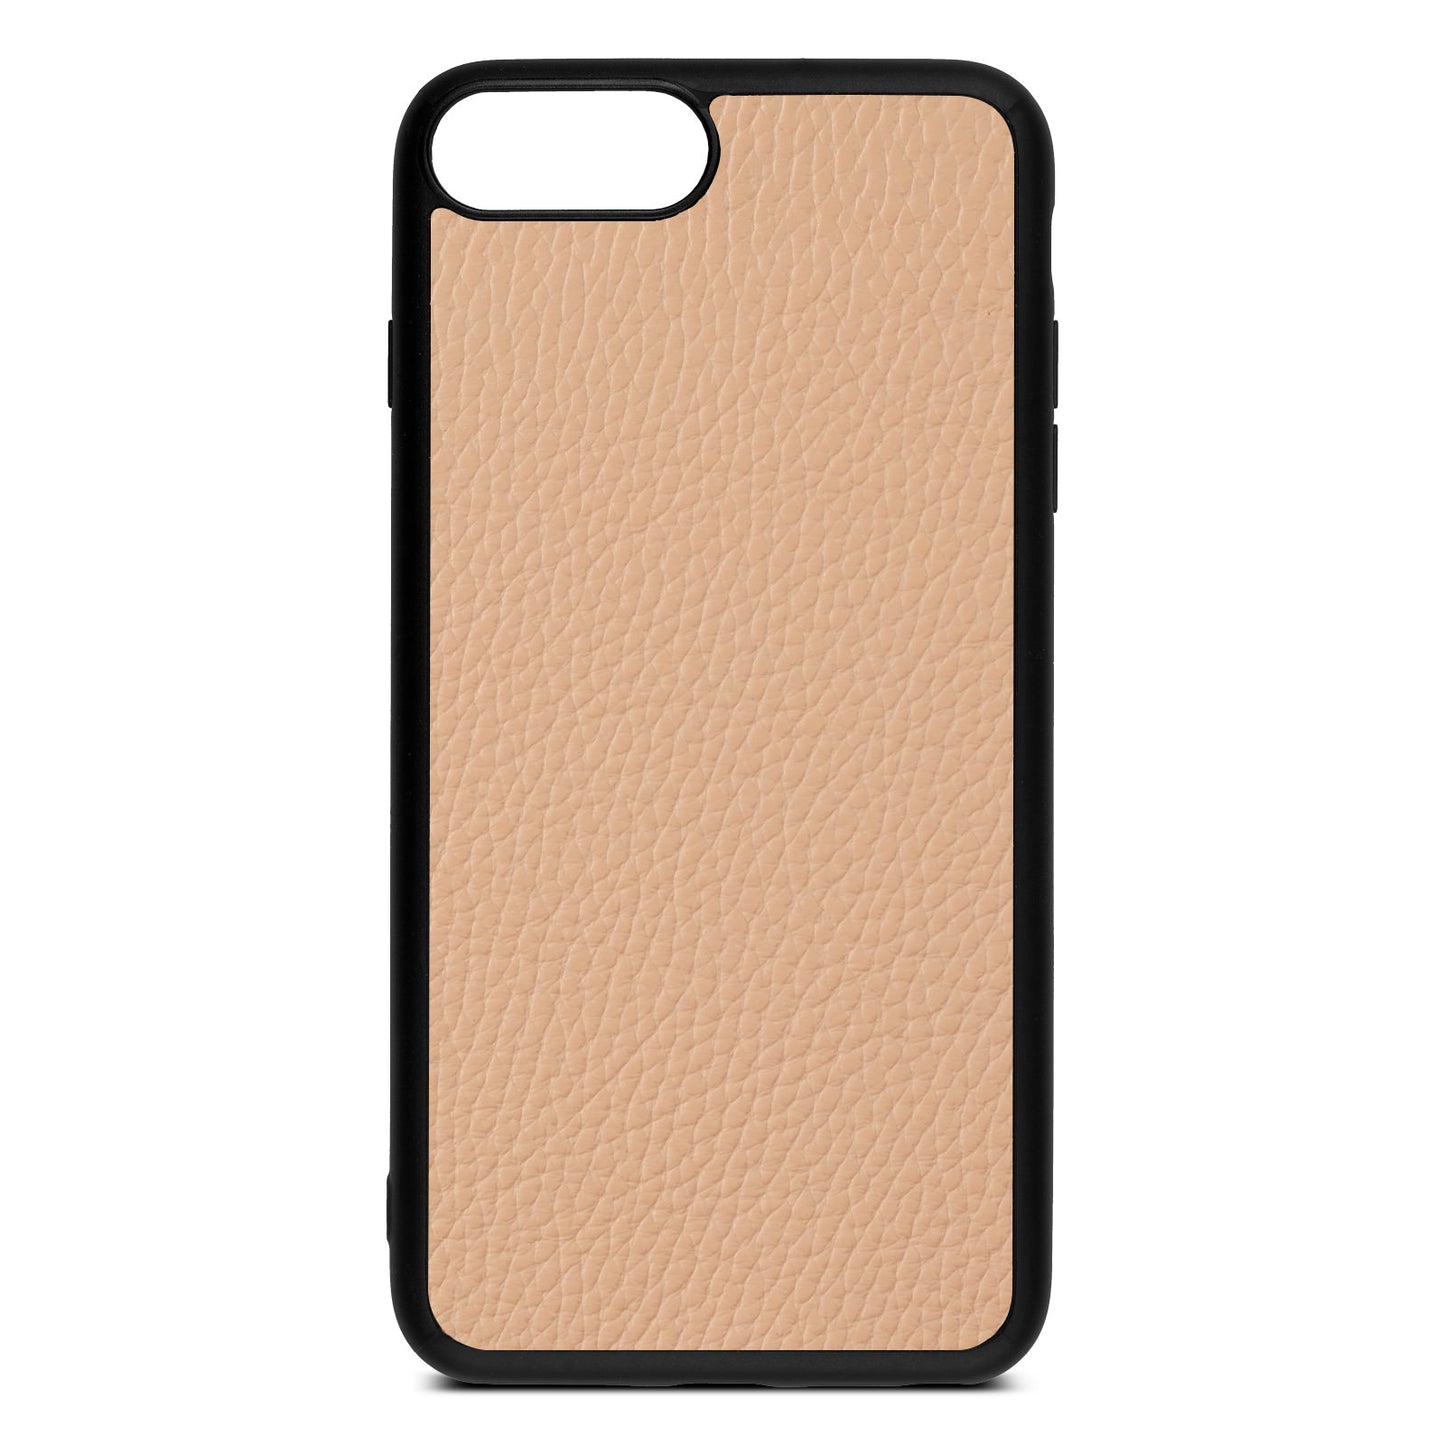 Blank iPhone 8 Plus Nude Pebble Leather Case